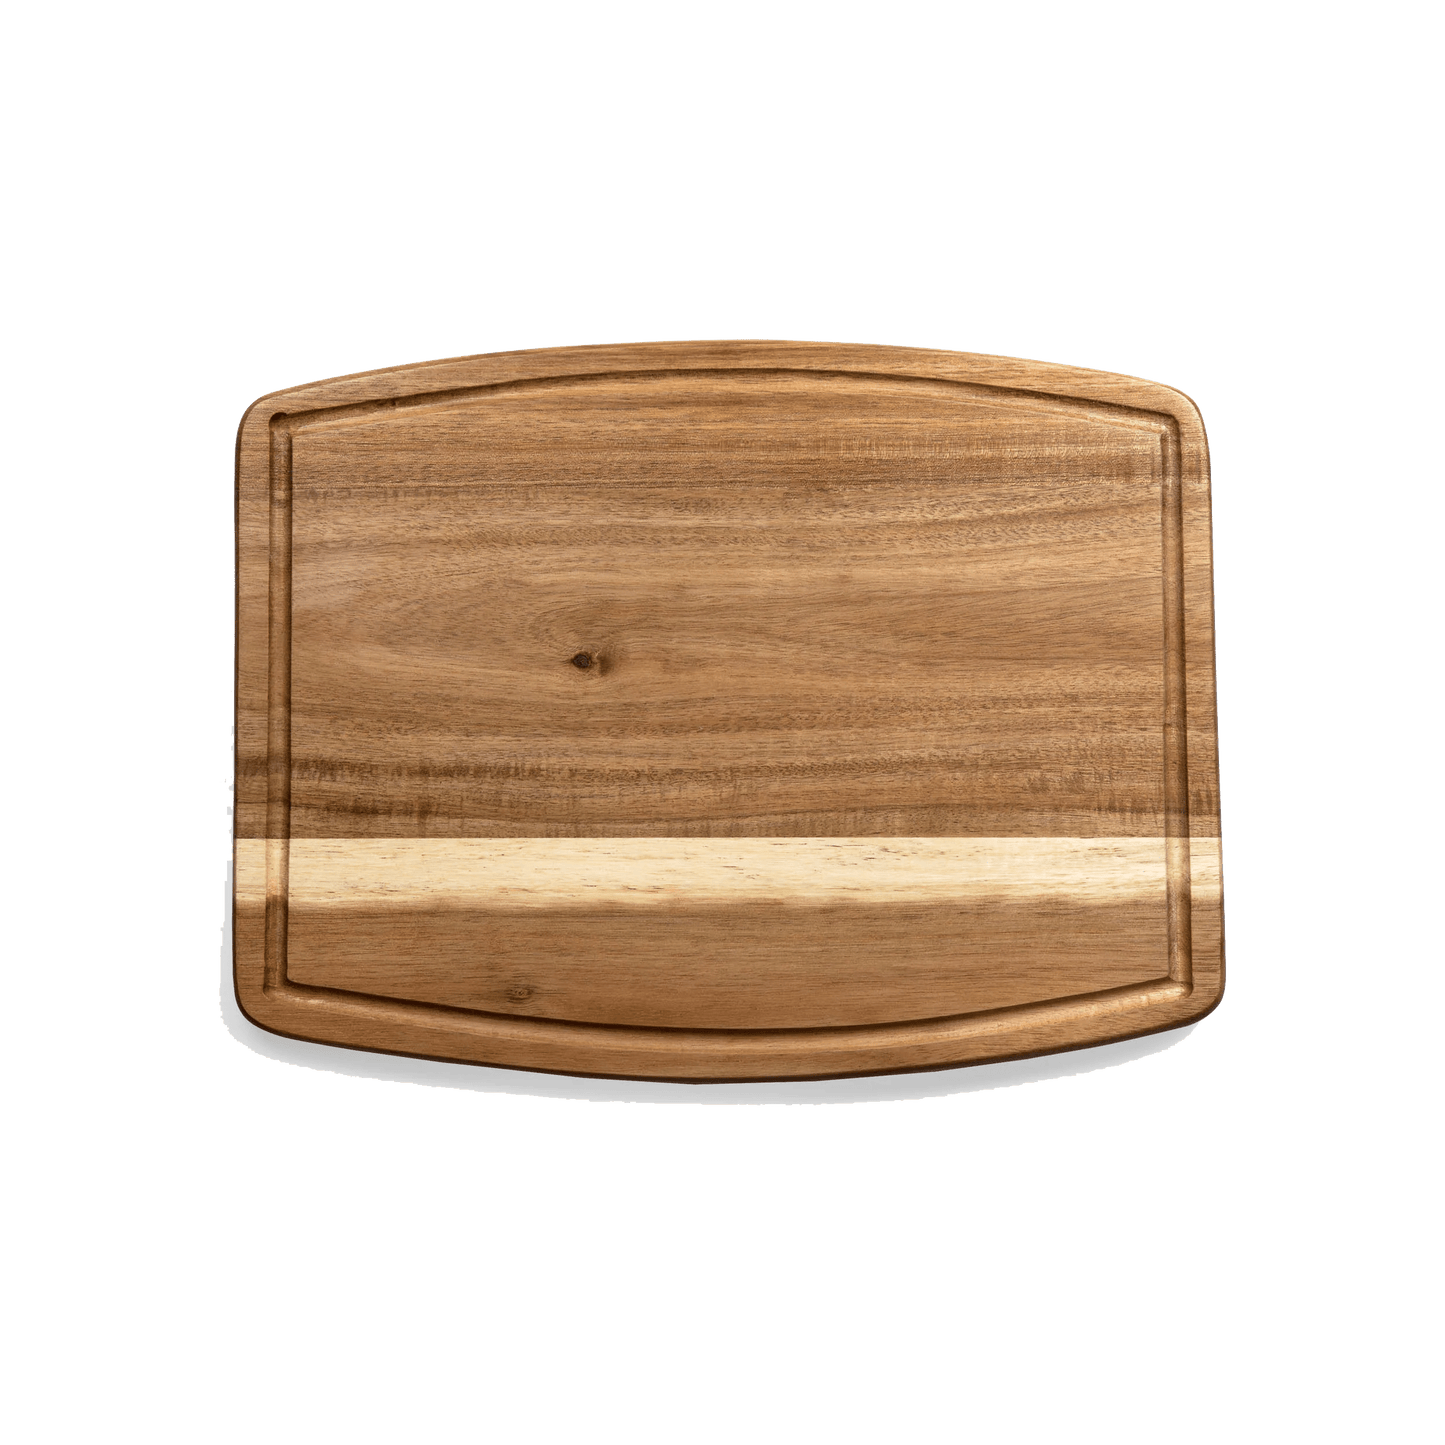 Custom Acacia Cutting Board